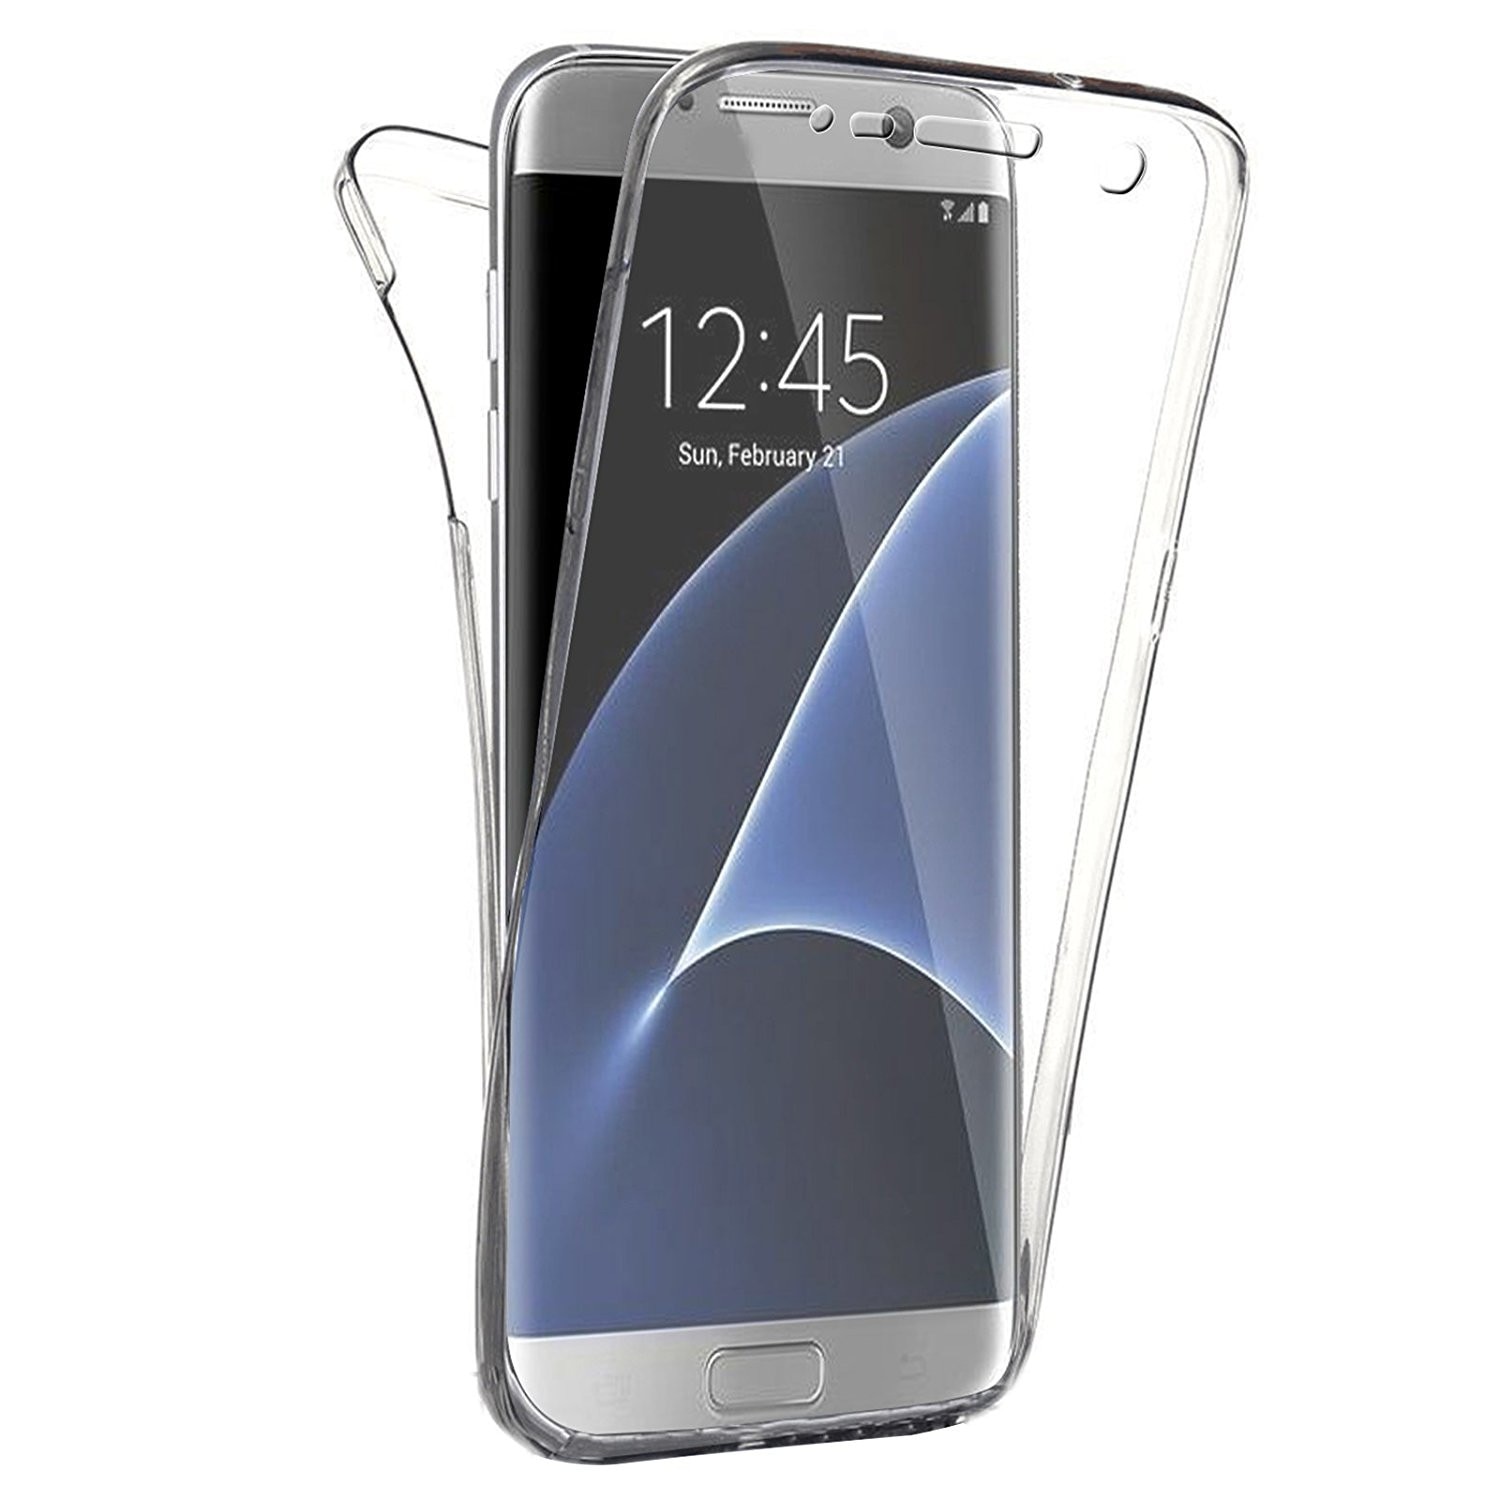 revenge Zealot Battleship Husa Samsung Galaxy S7 Edge Silicon TPU 360 grade (fata spate) -  transparent - eMAG.ro